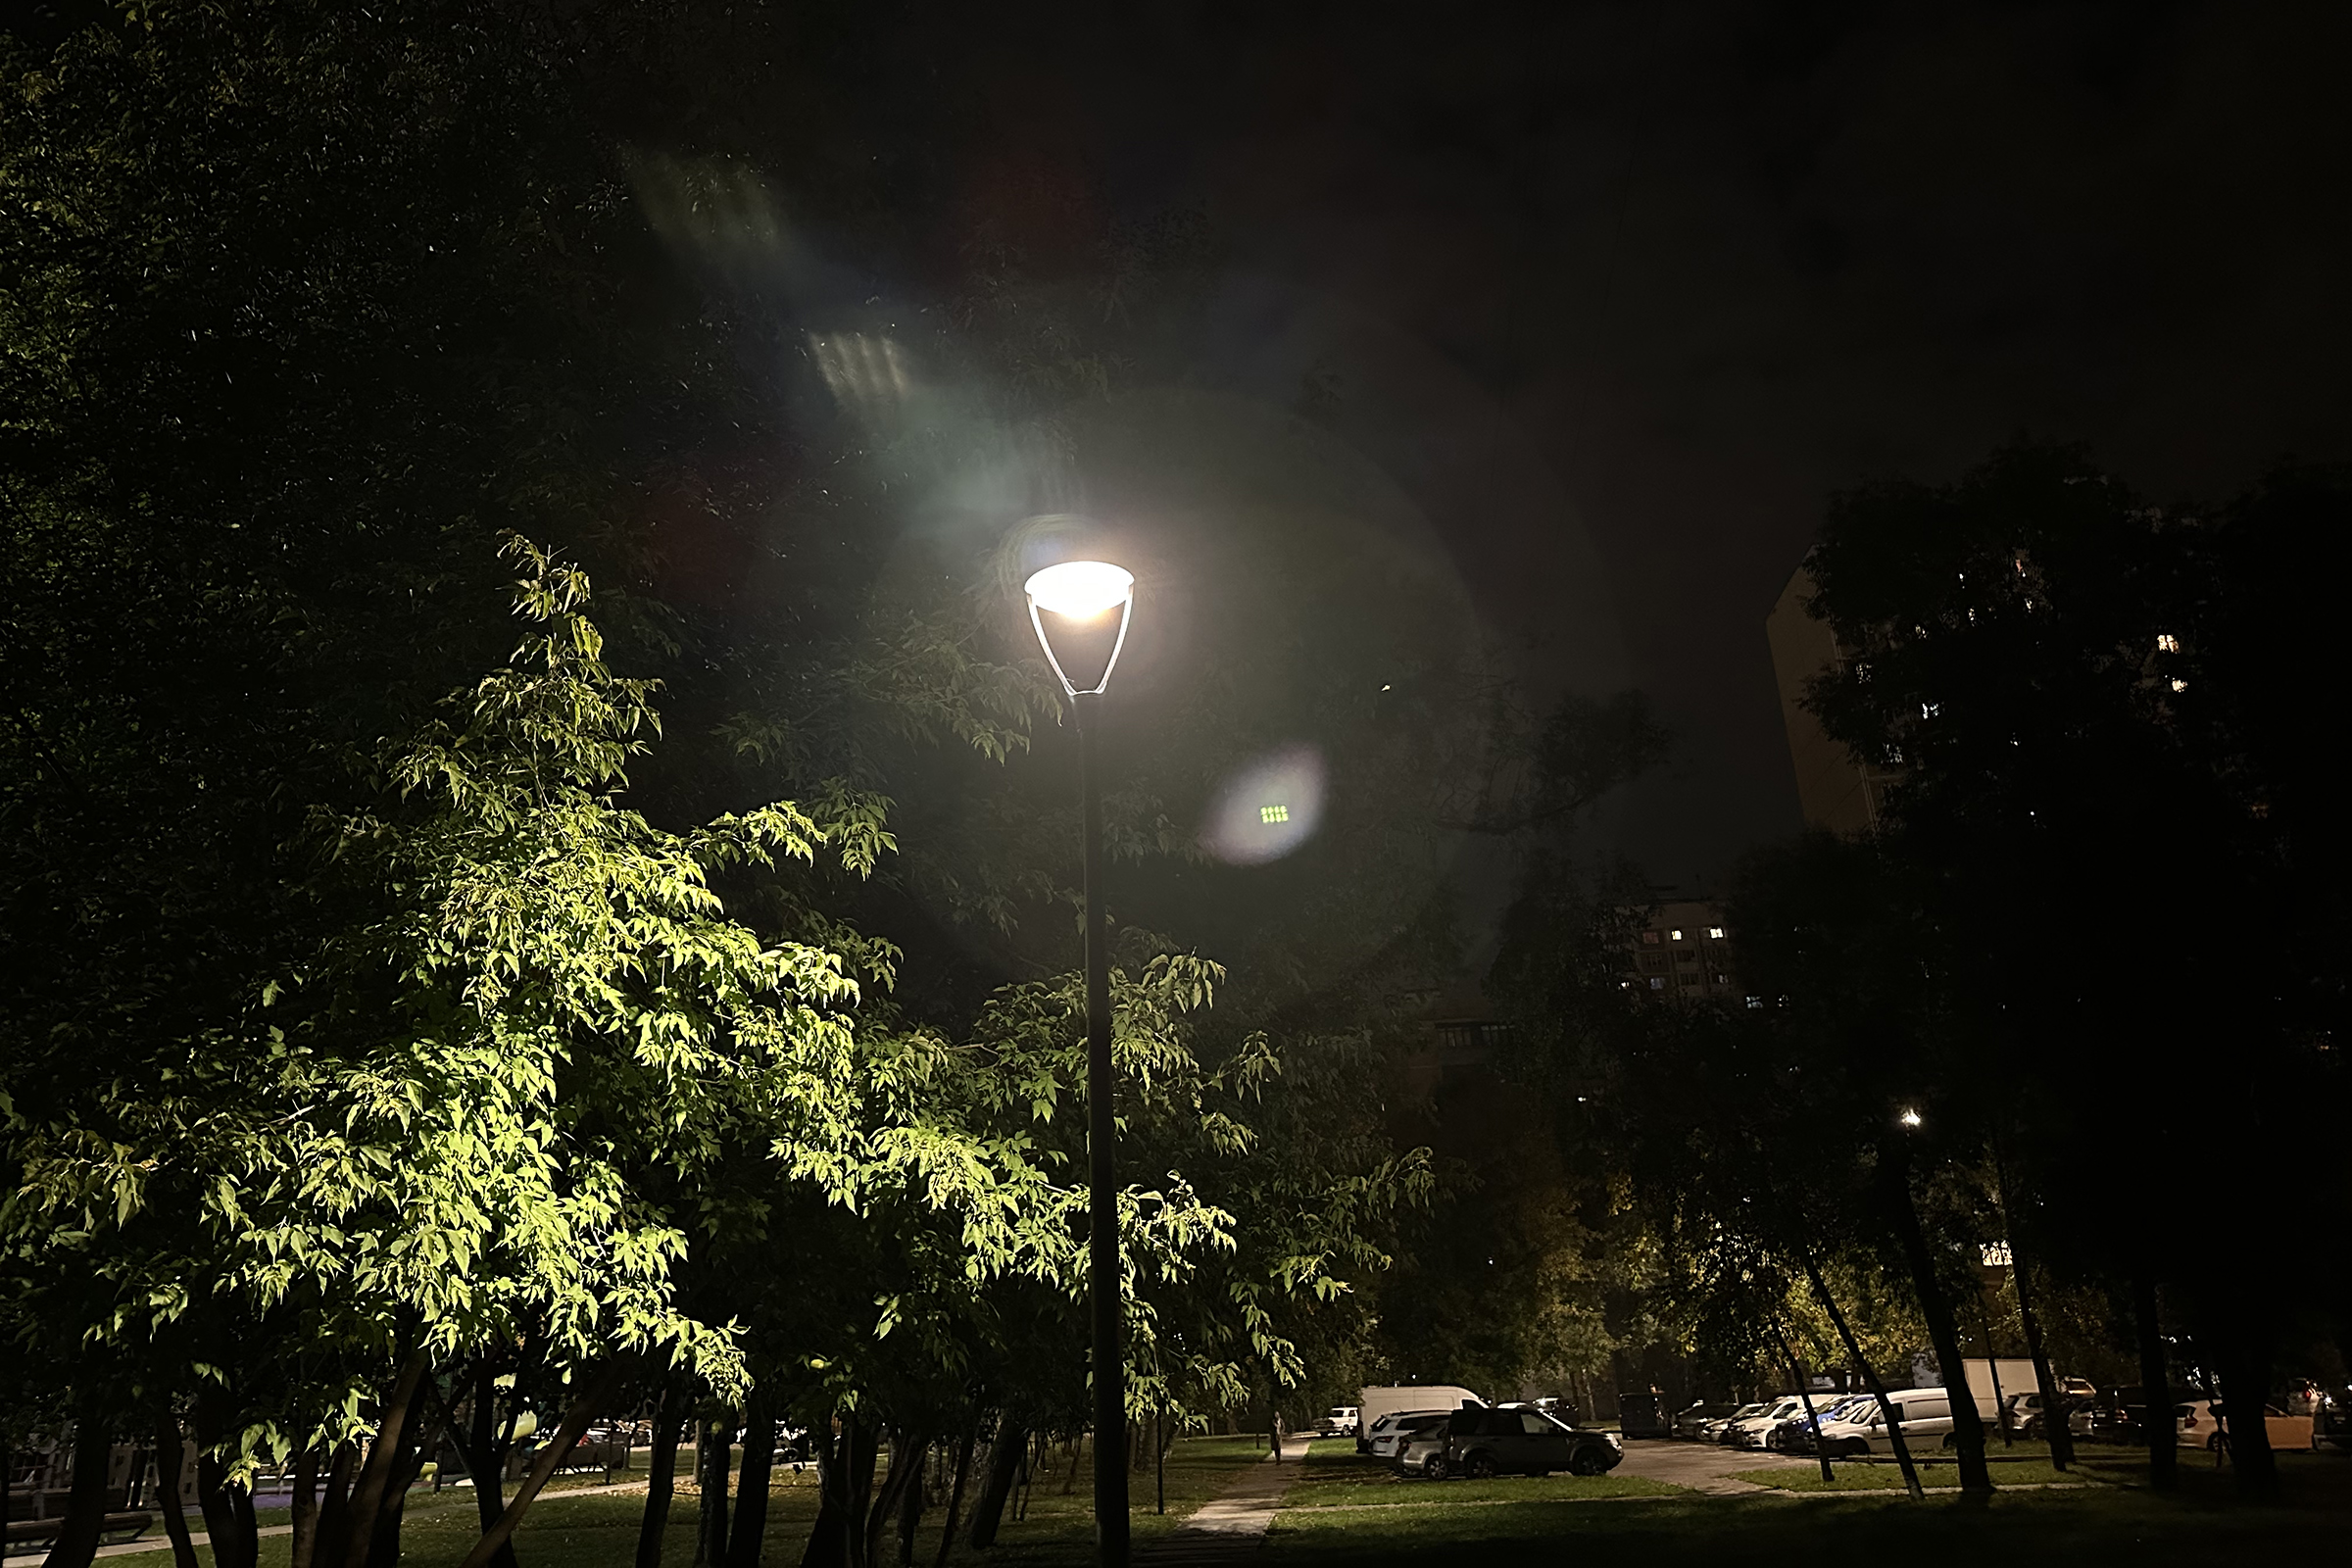 Сложная ночная сцена: яркий фонарь проработан достаточно четко, а на фоне в темноте хорошо видно дерево слева и дом справа. Парковка на заднем плане не пересвечена